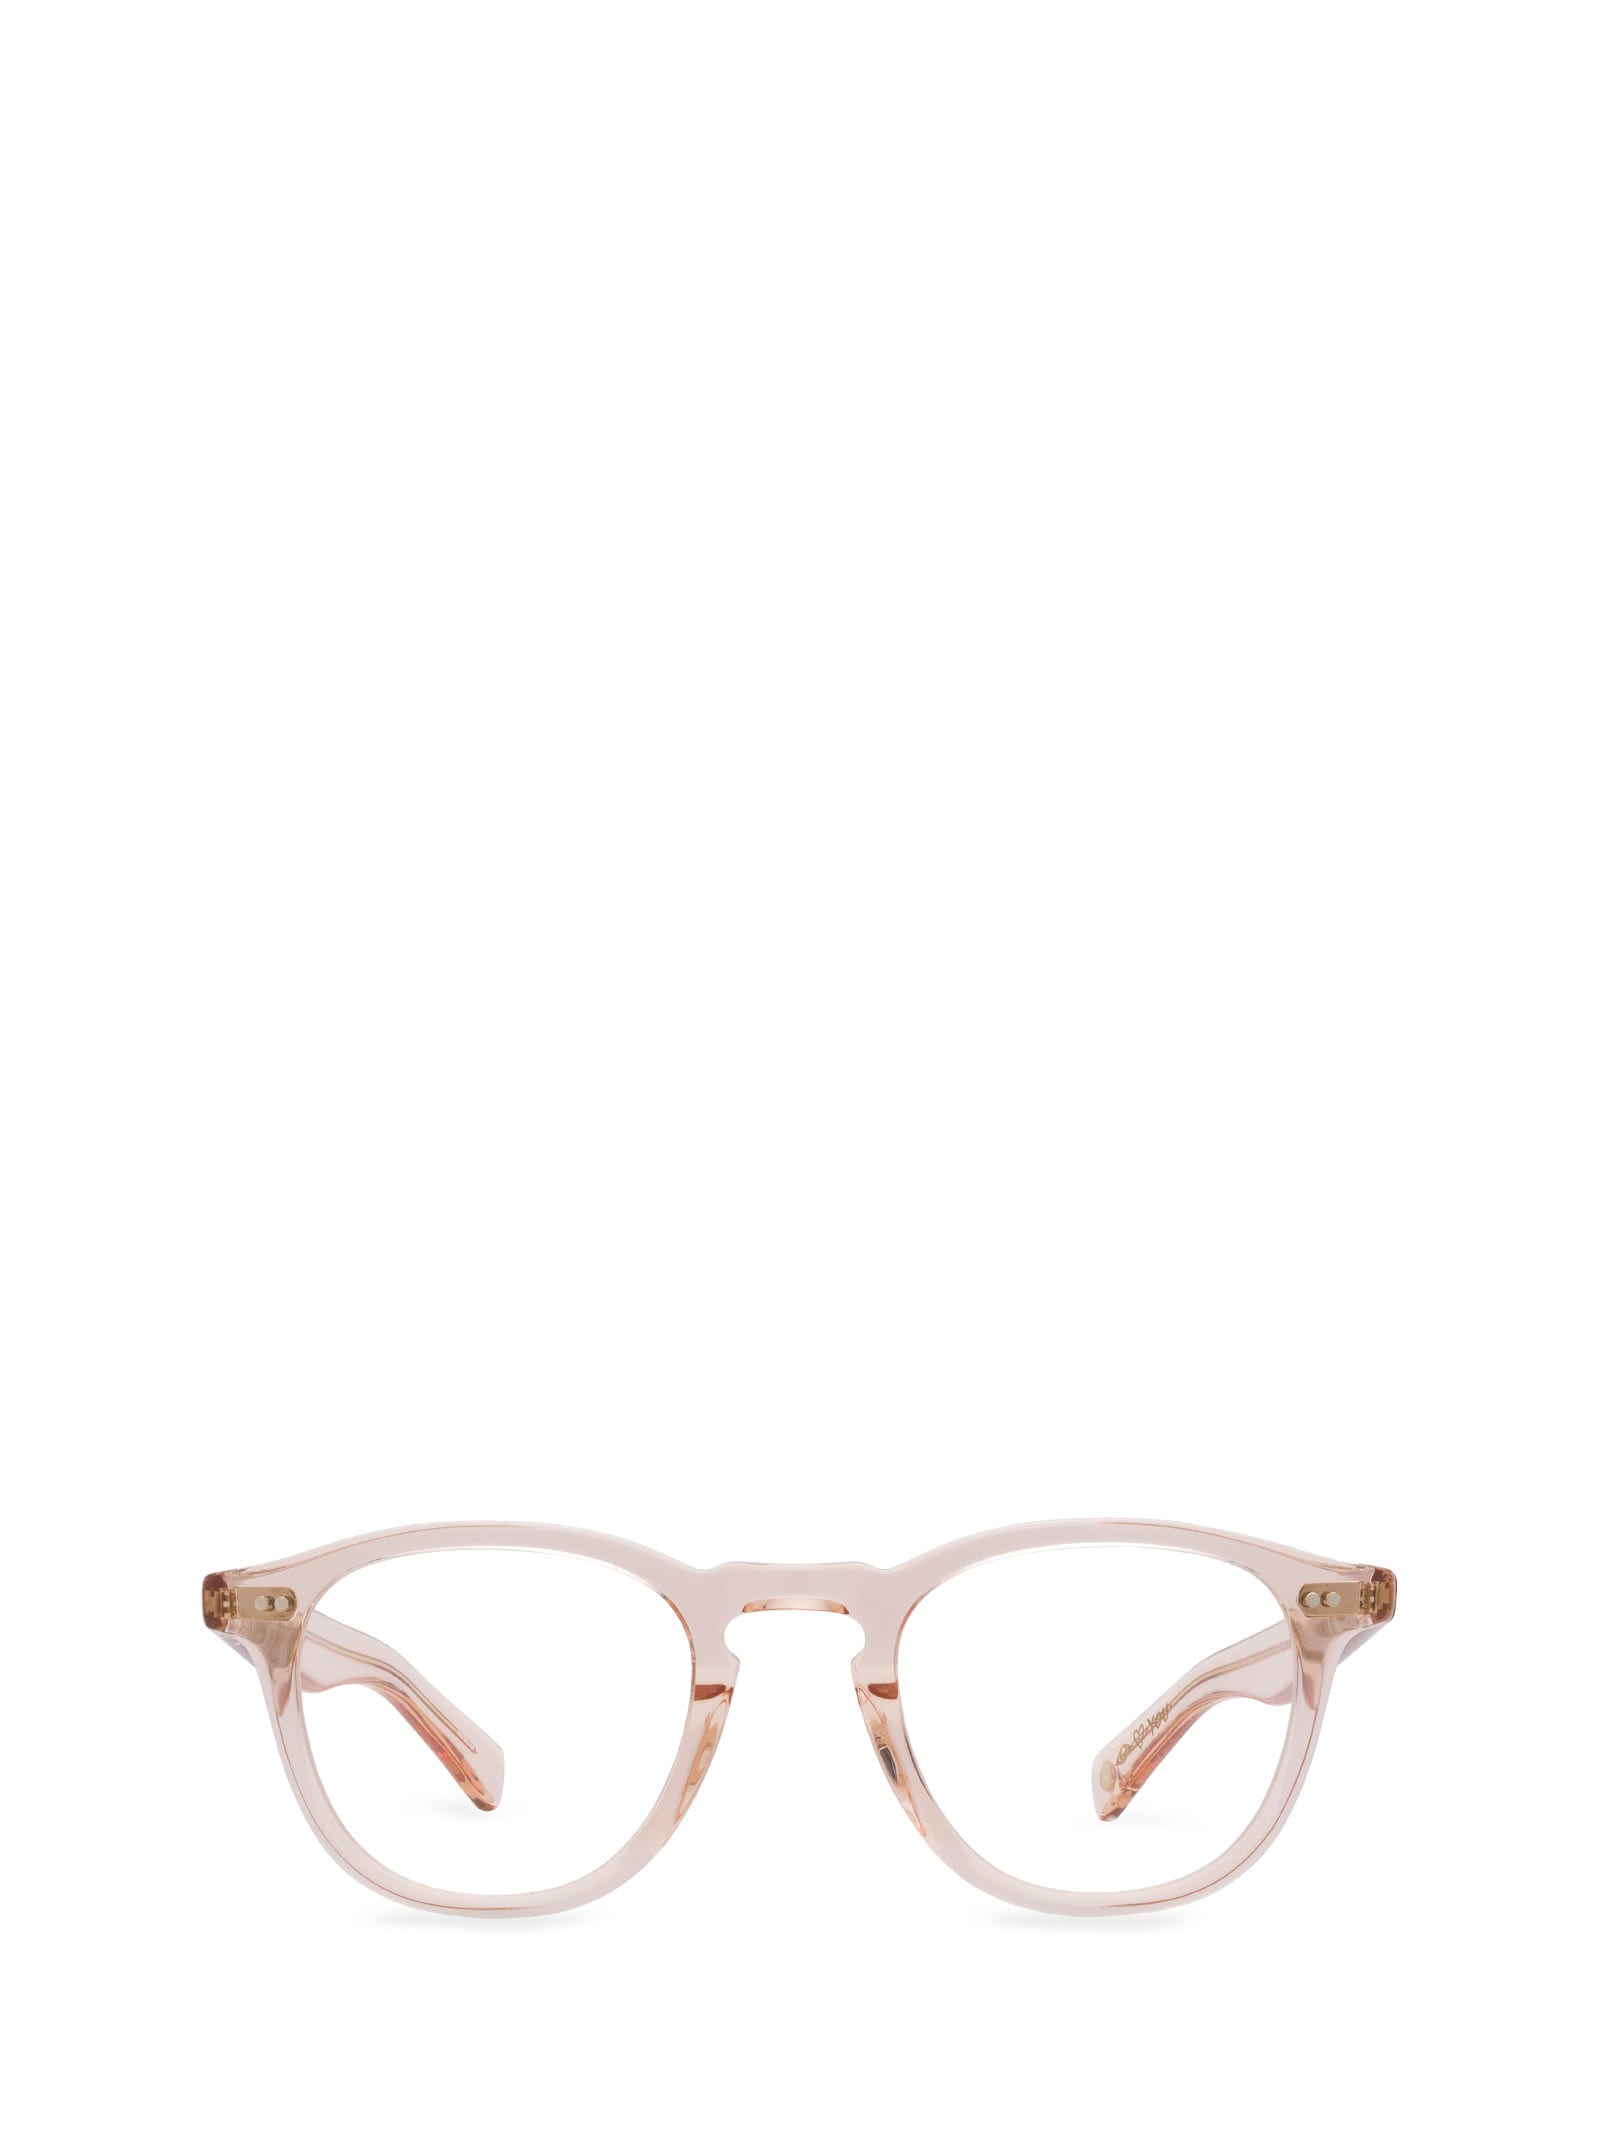 Glco X Andre Saraiva Pink Crystal Glasses